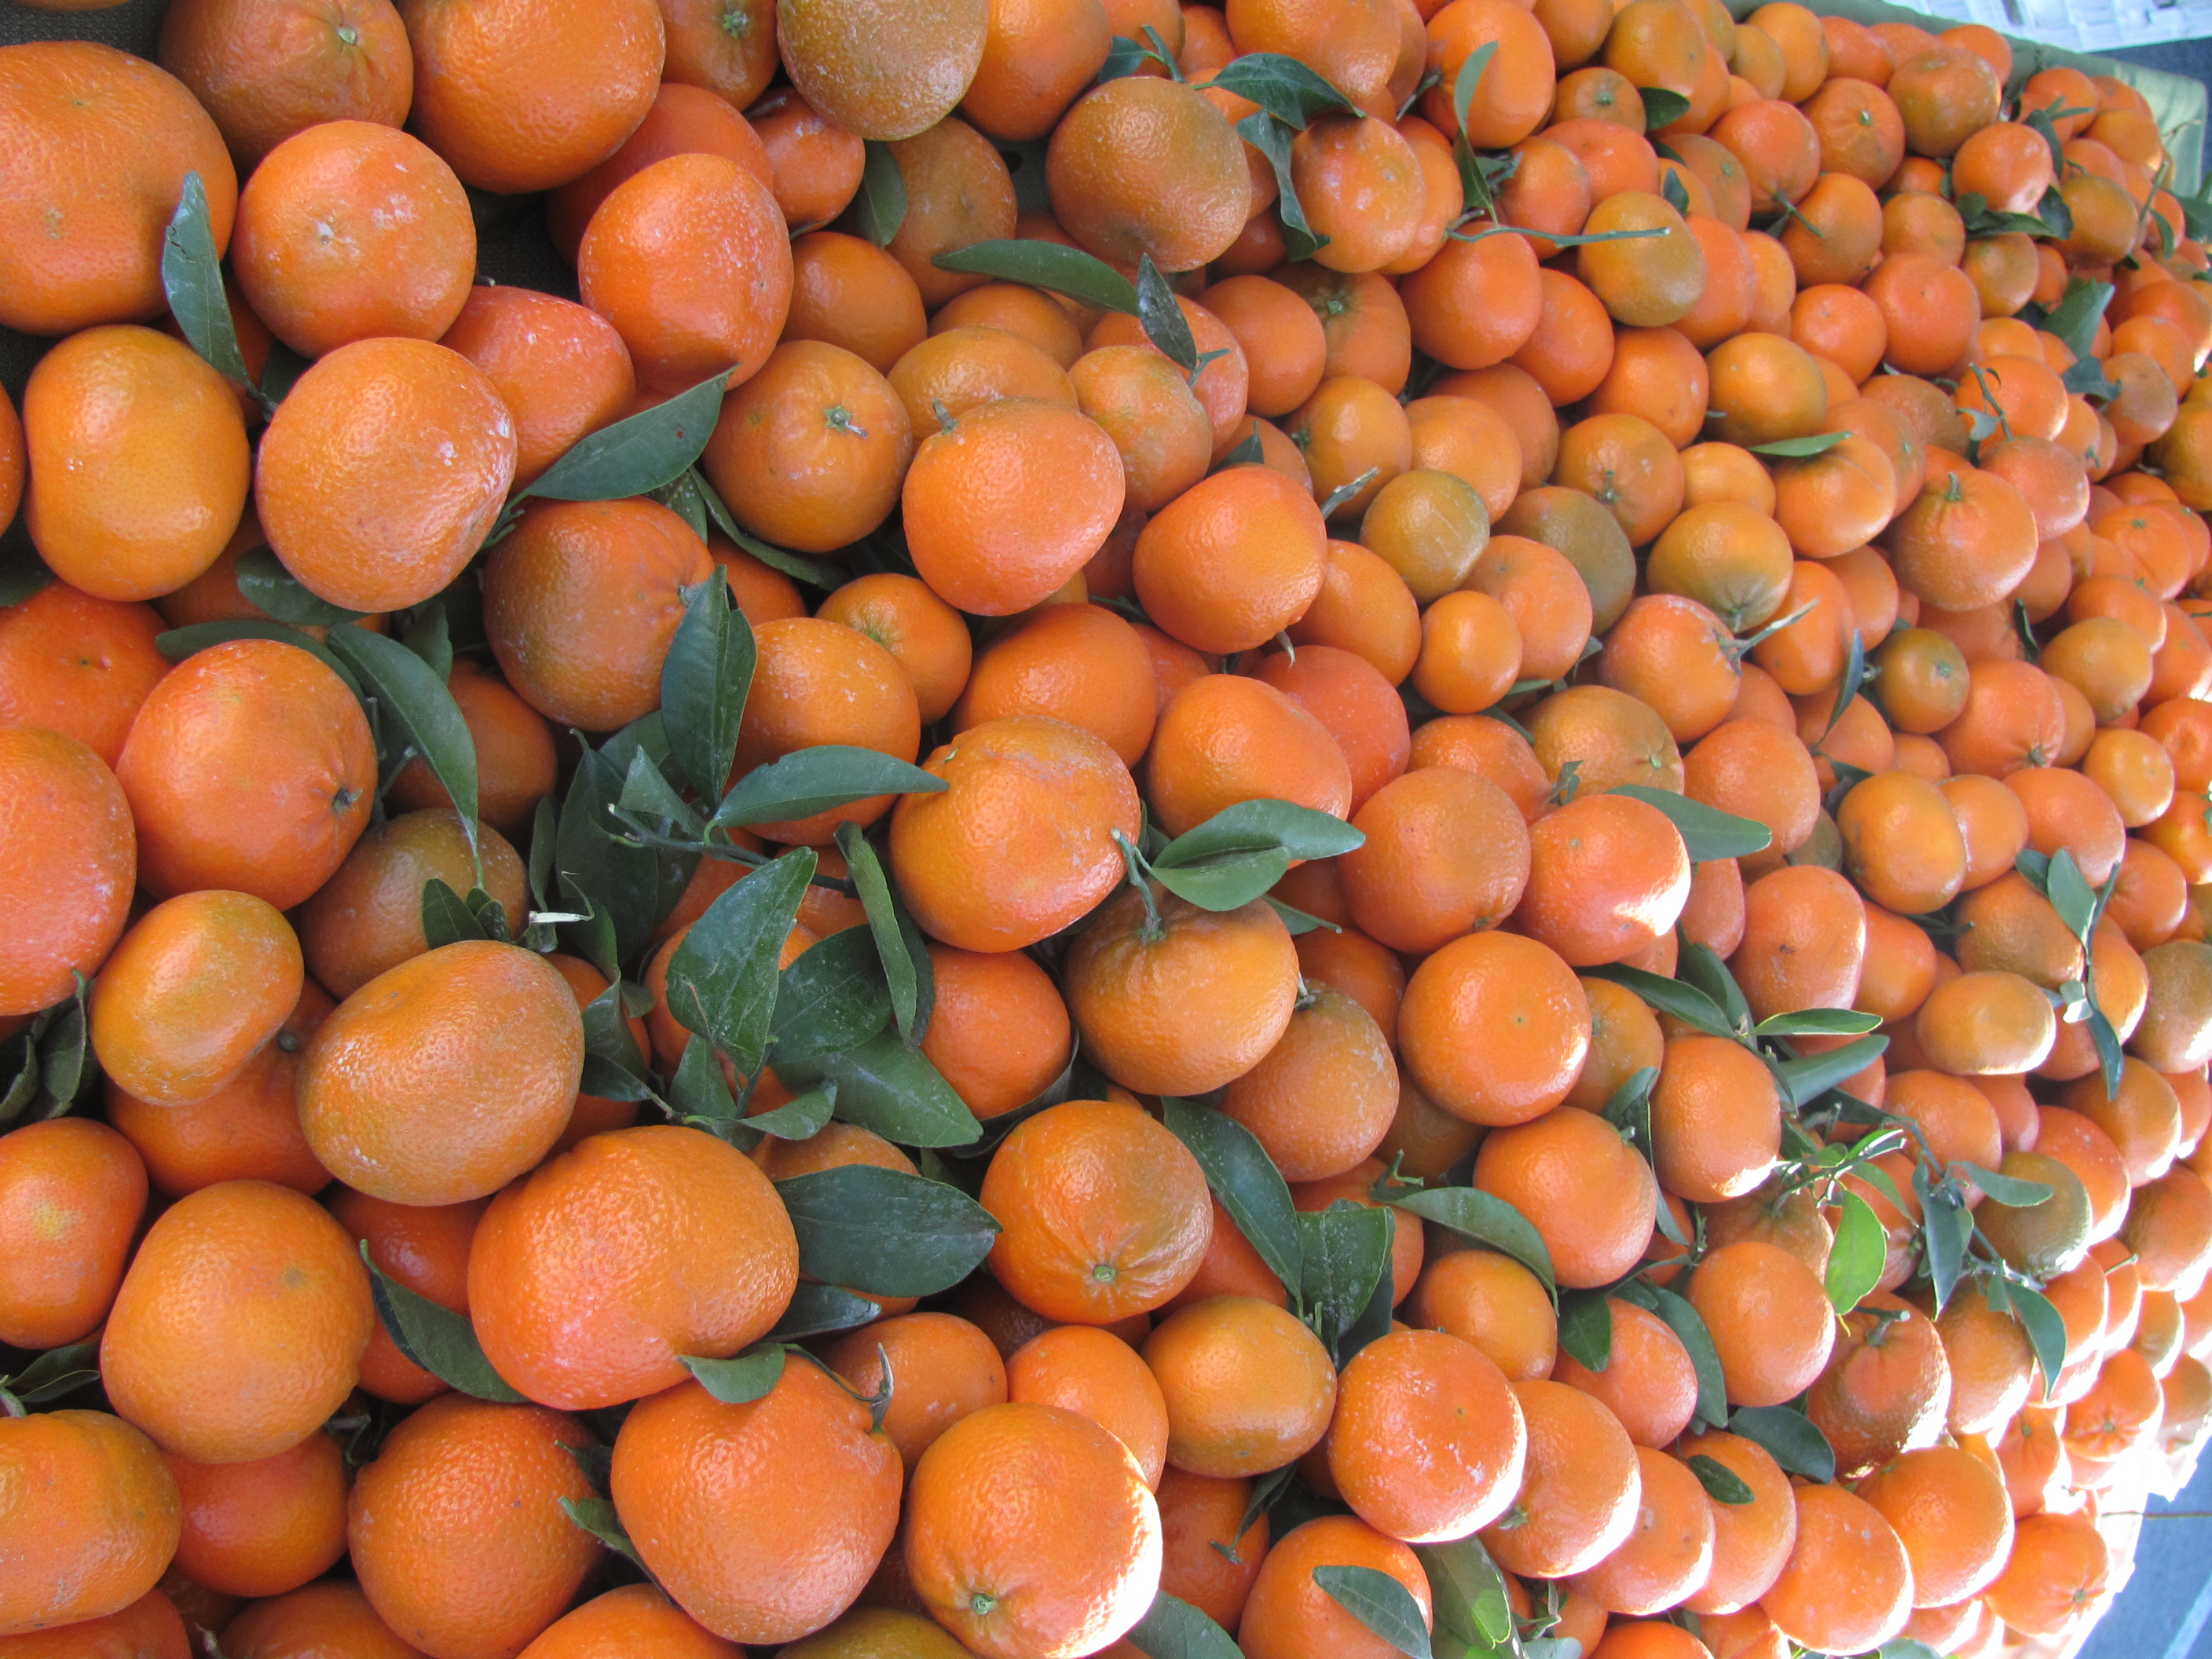 Oranges at Fort Mason Center Farmers' Market